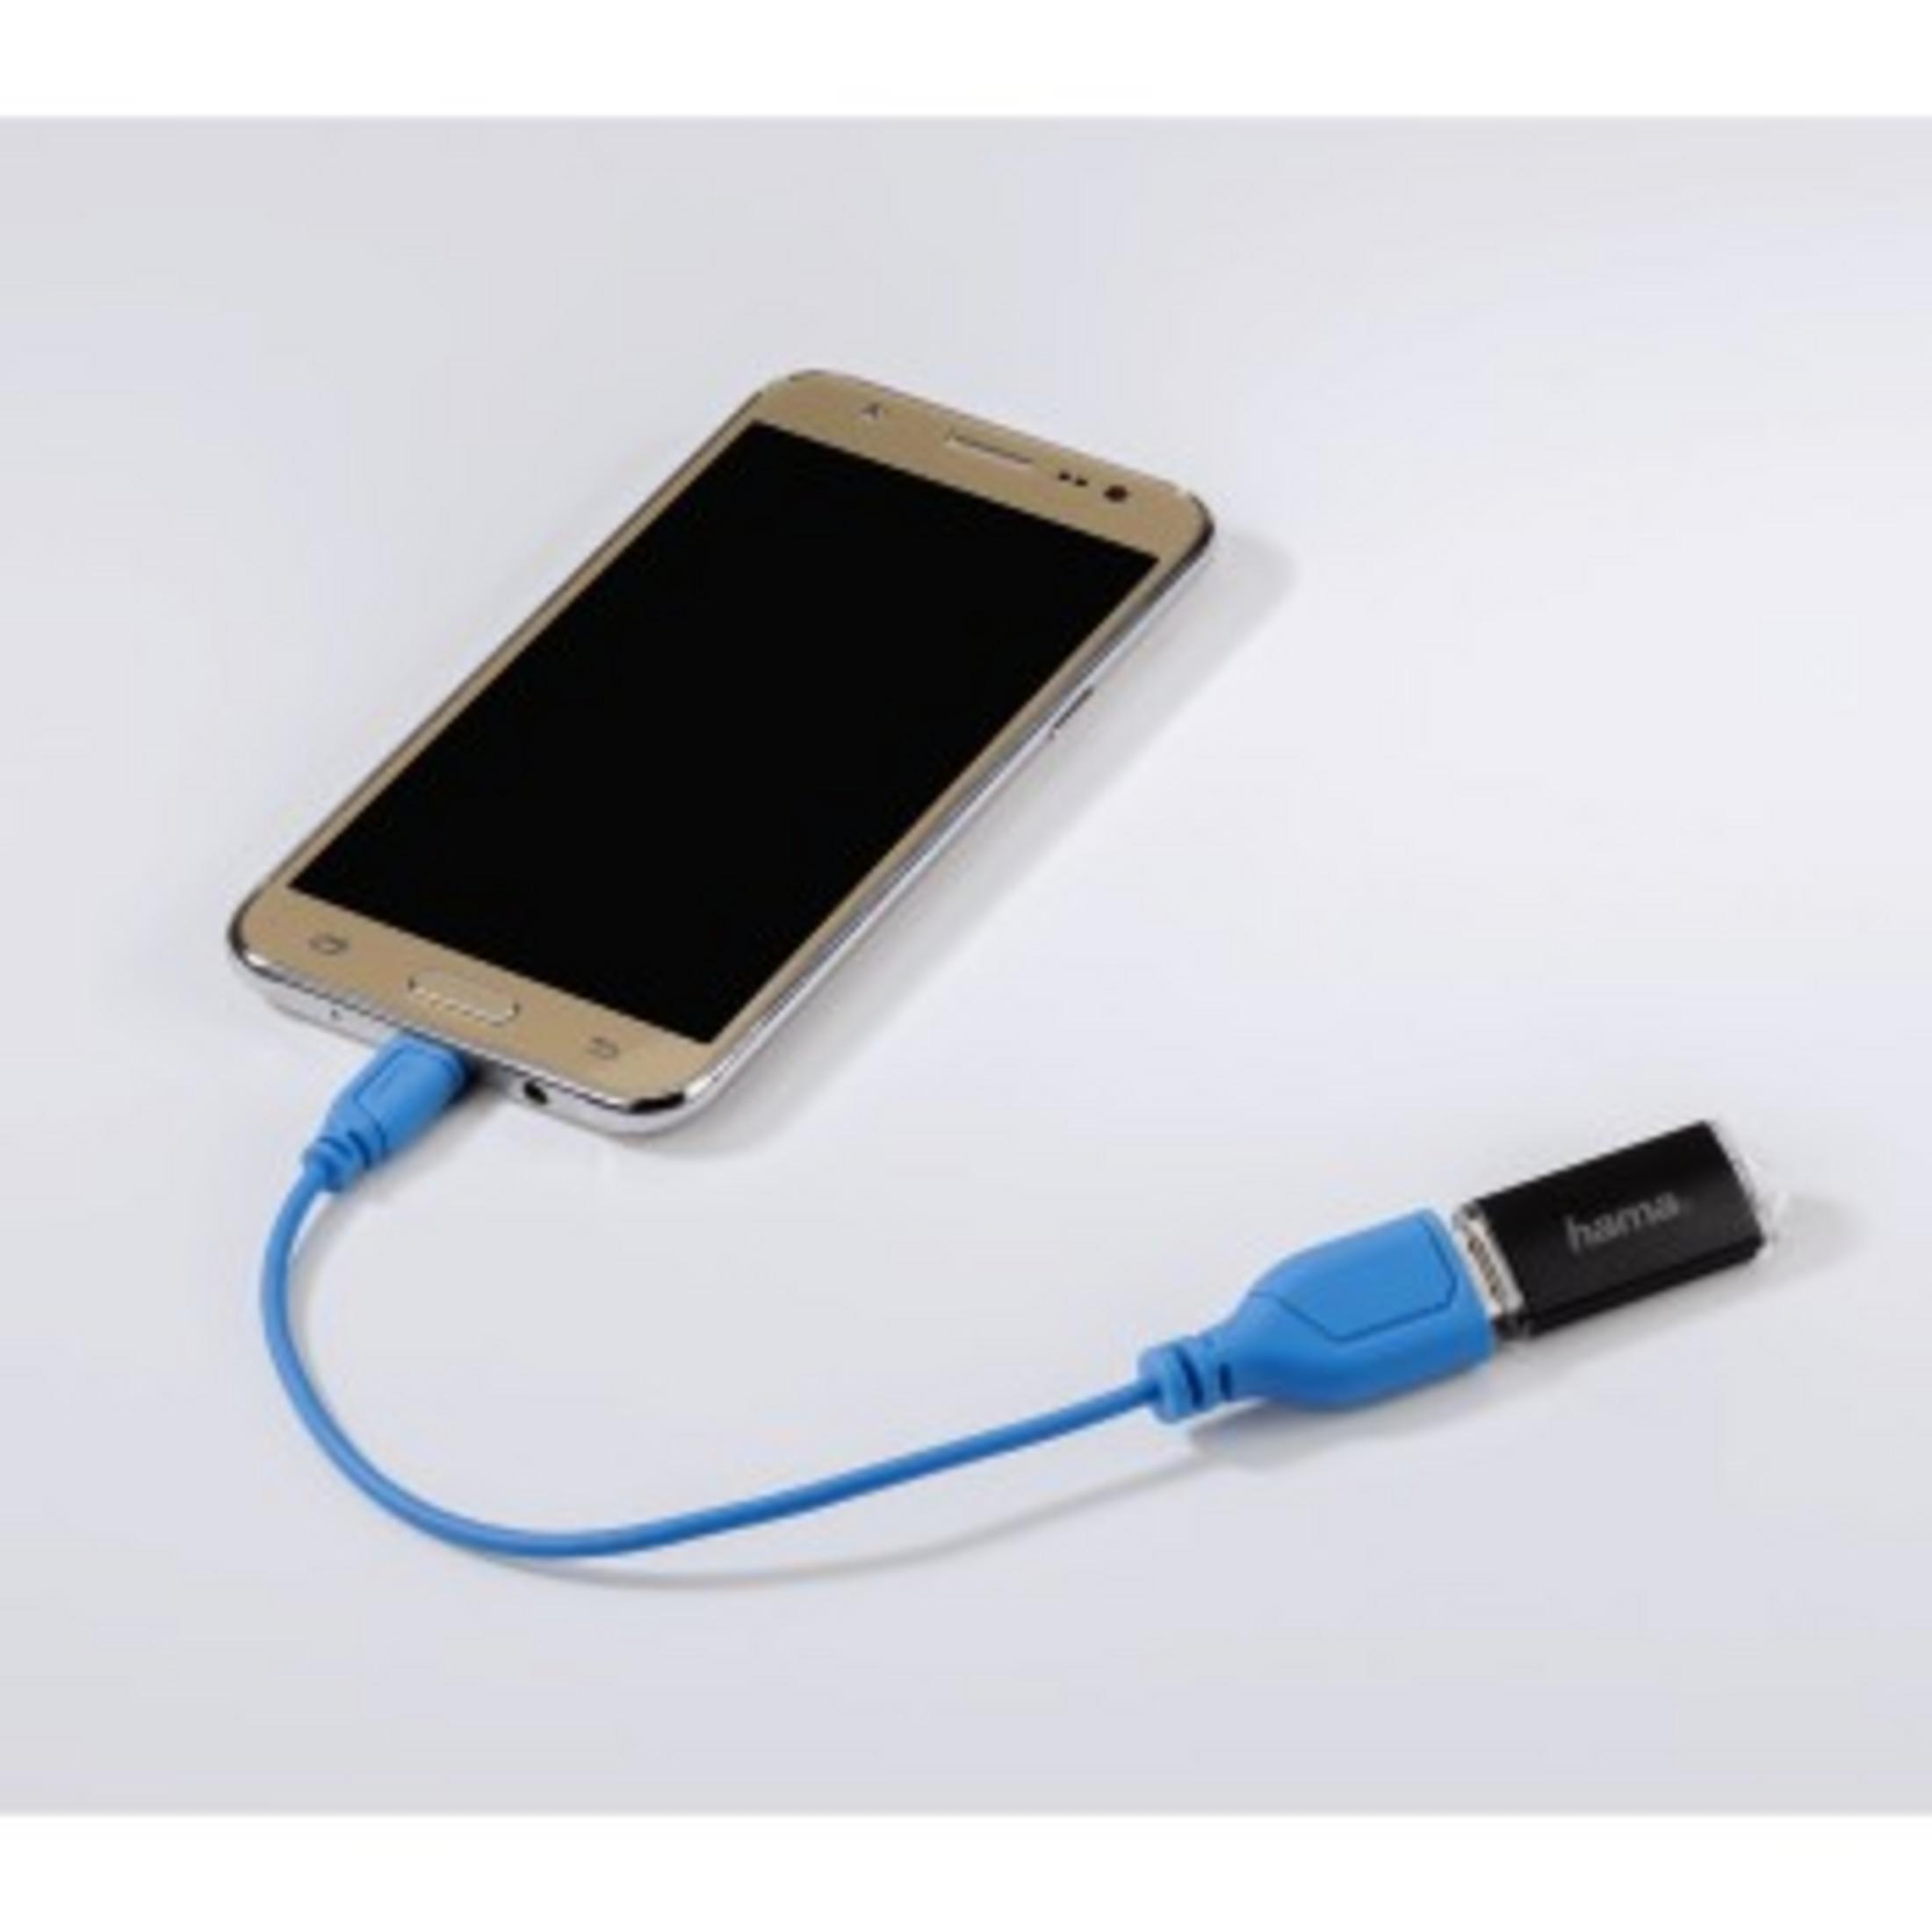 USB FLEXI USB Adapter, HAMA 135705 BLAU, m 0,15M OTG 0,15